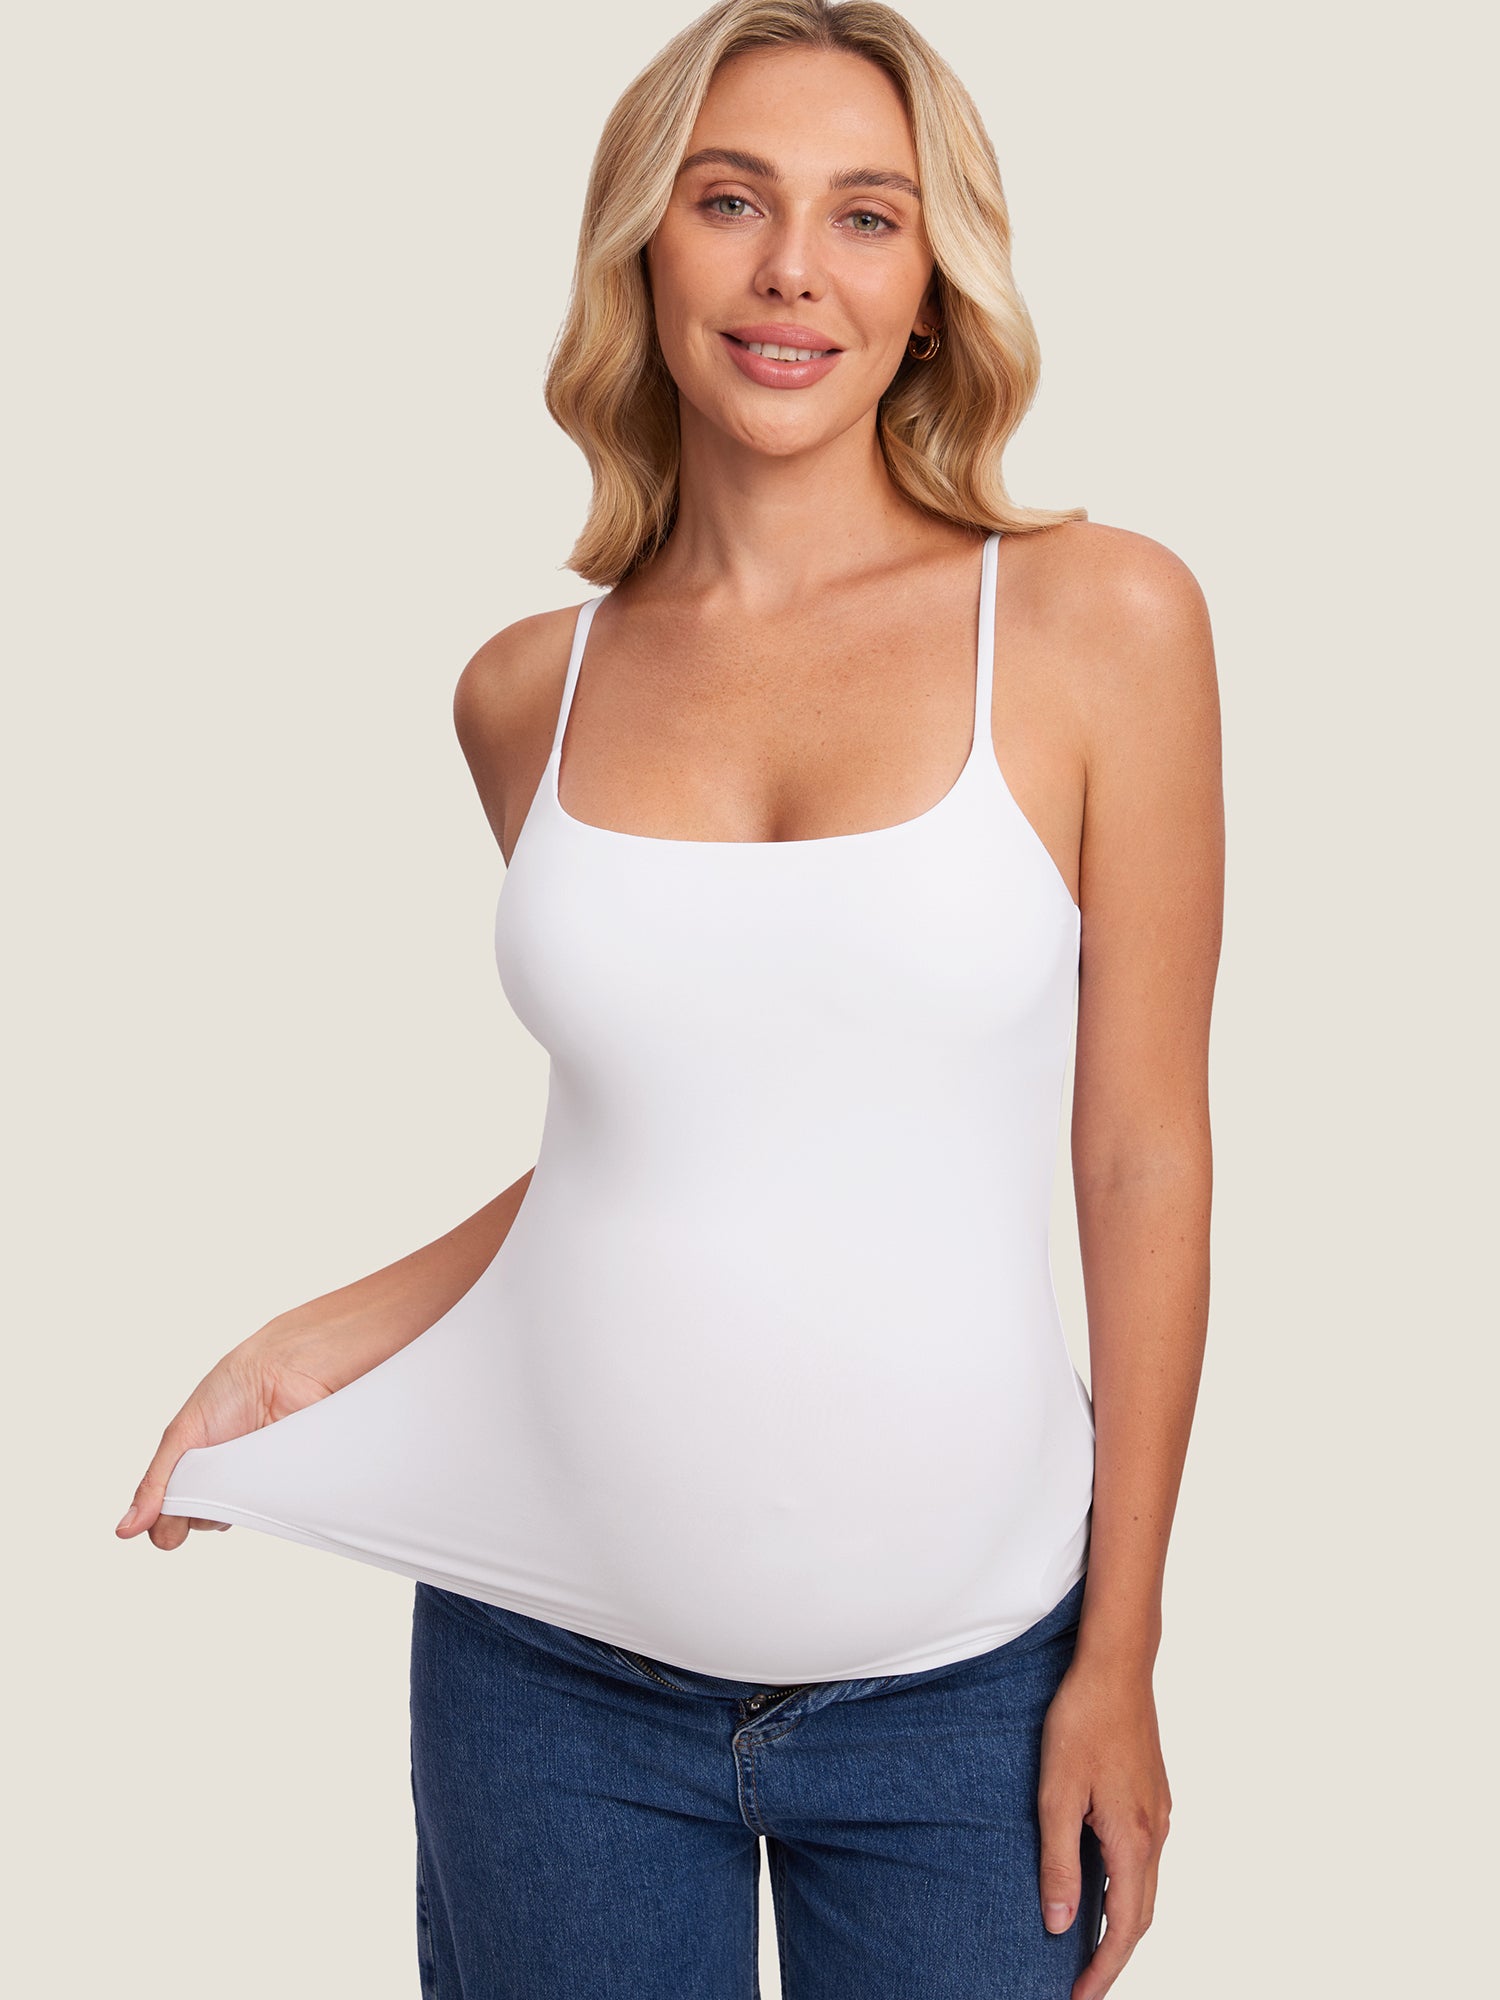 Inbarely® Maternity Camisole Tank Top